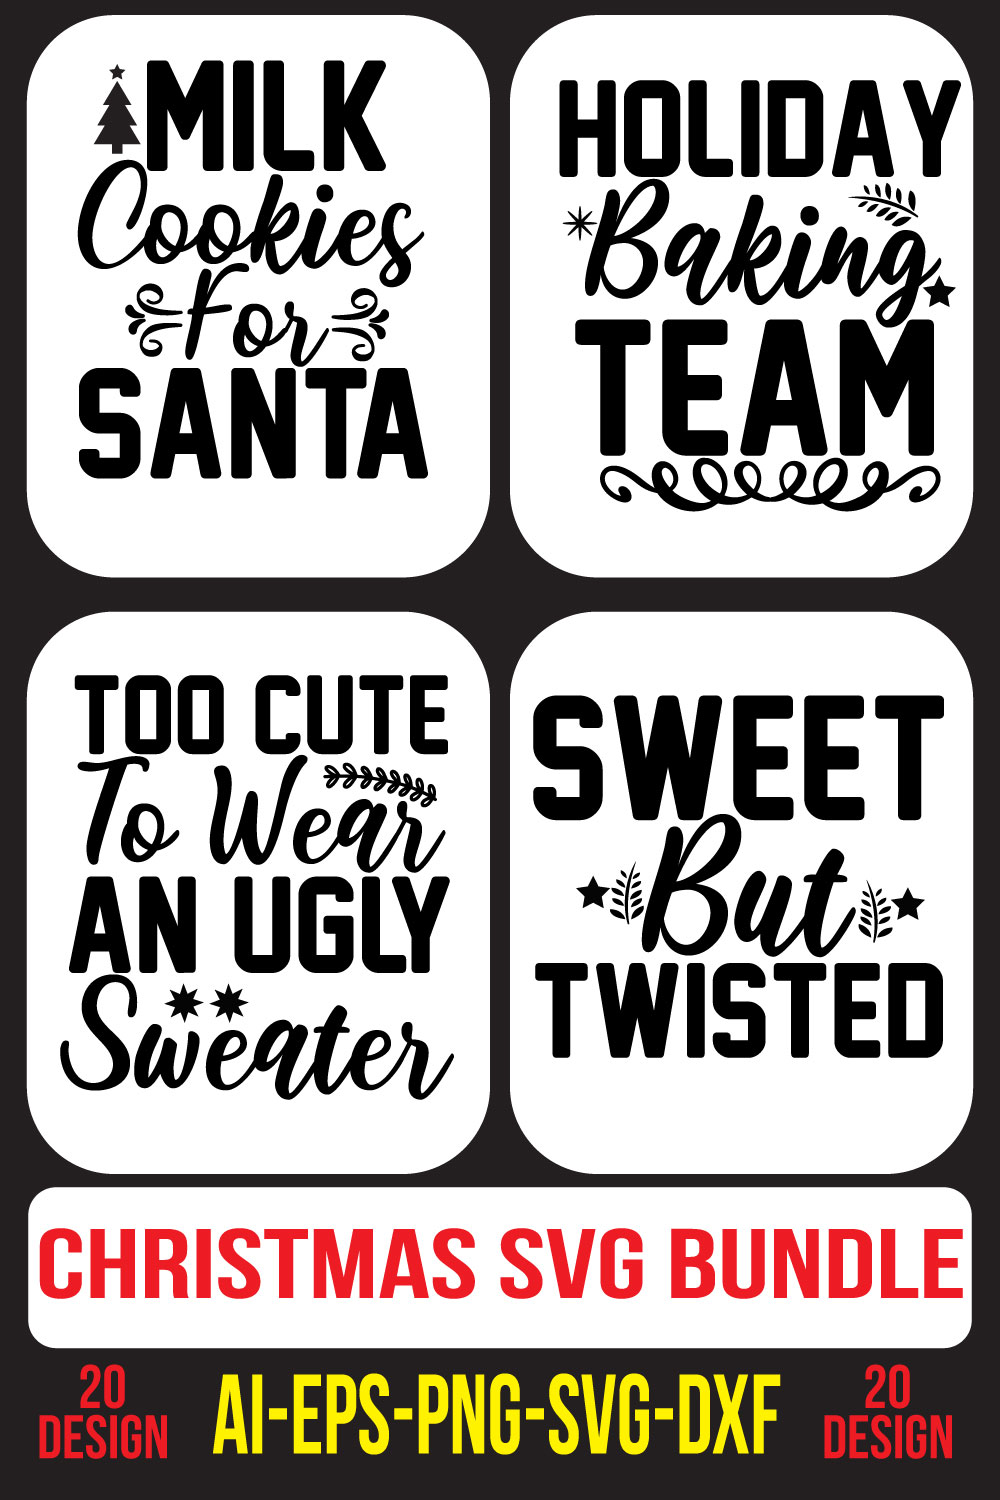 Christmas SVG Bundle pinterest preview image.